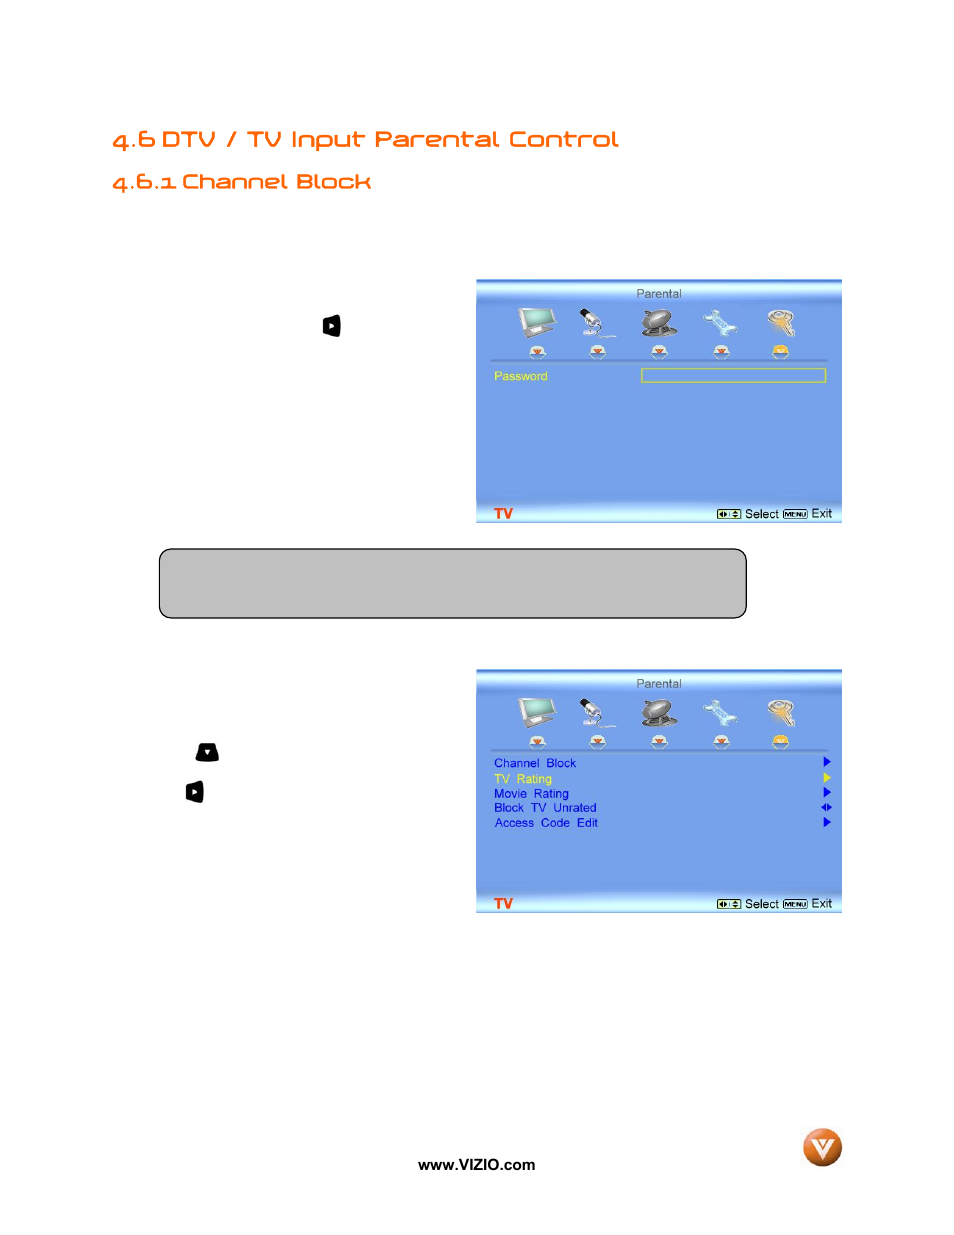 6 dtv / tv input parental control, 1 channel block | Vizio VP42 User Manual | Page 40 / 57